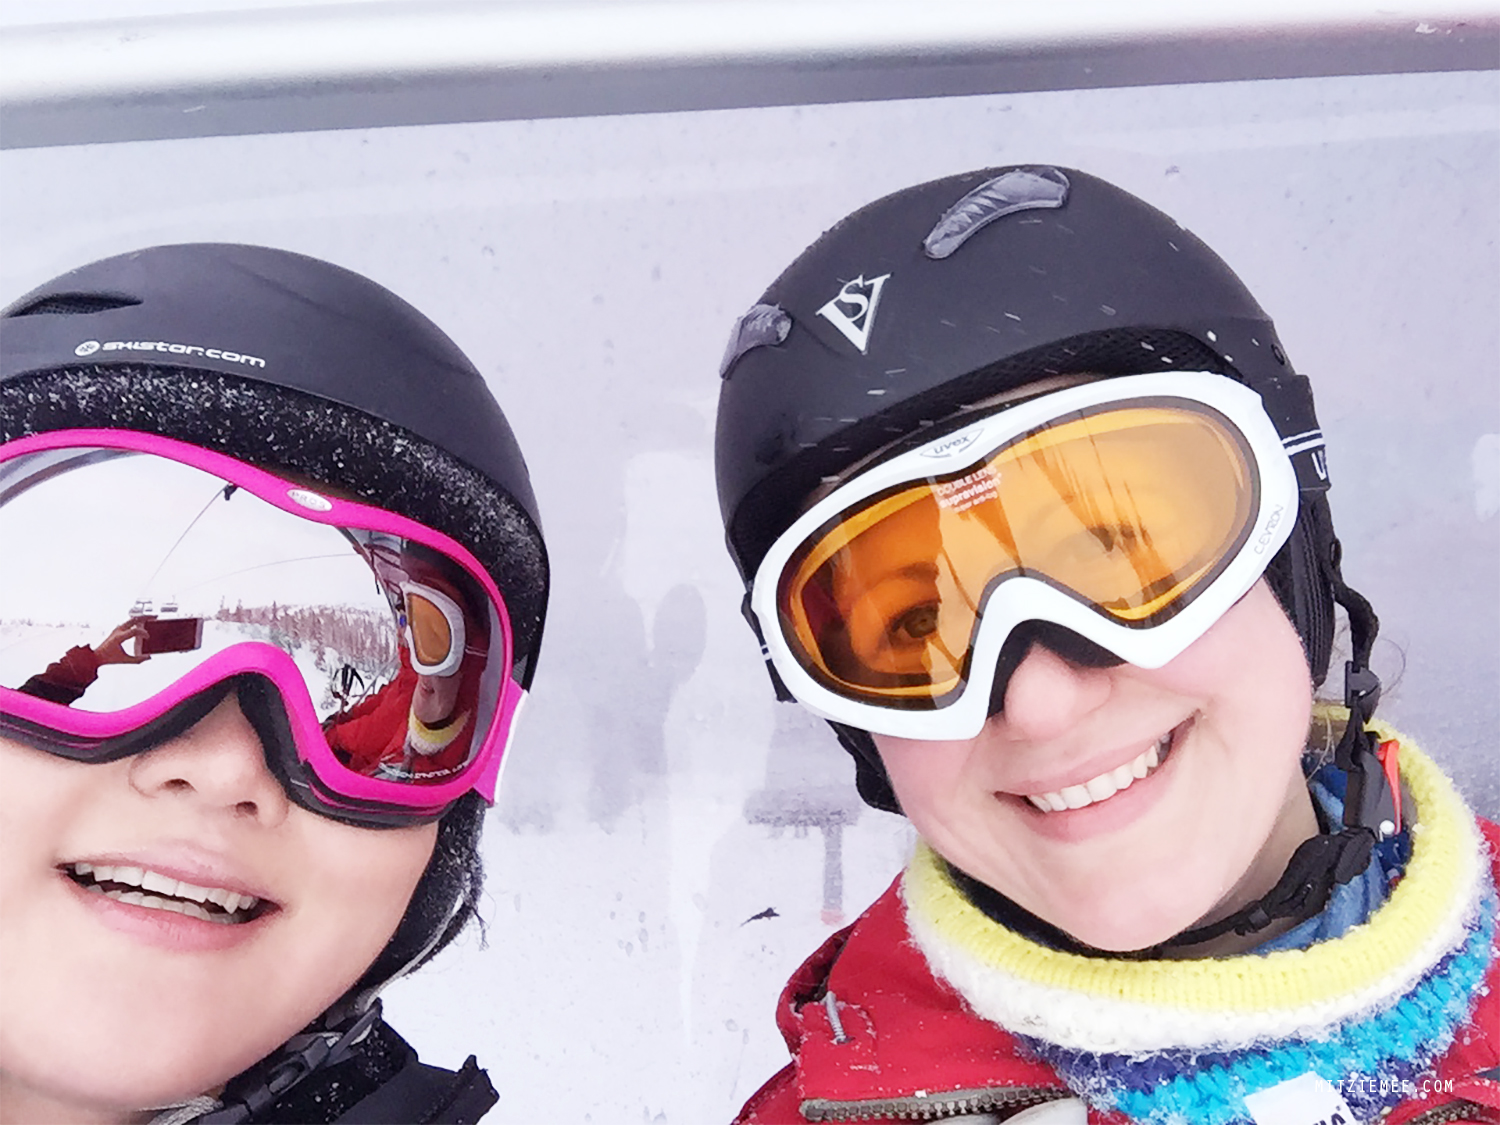 The ski lift selfie, Trysil, Norway